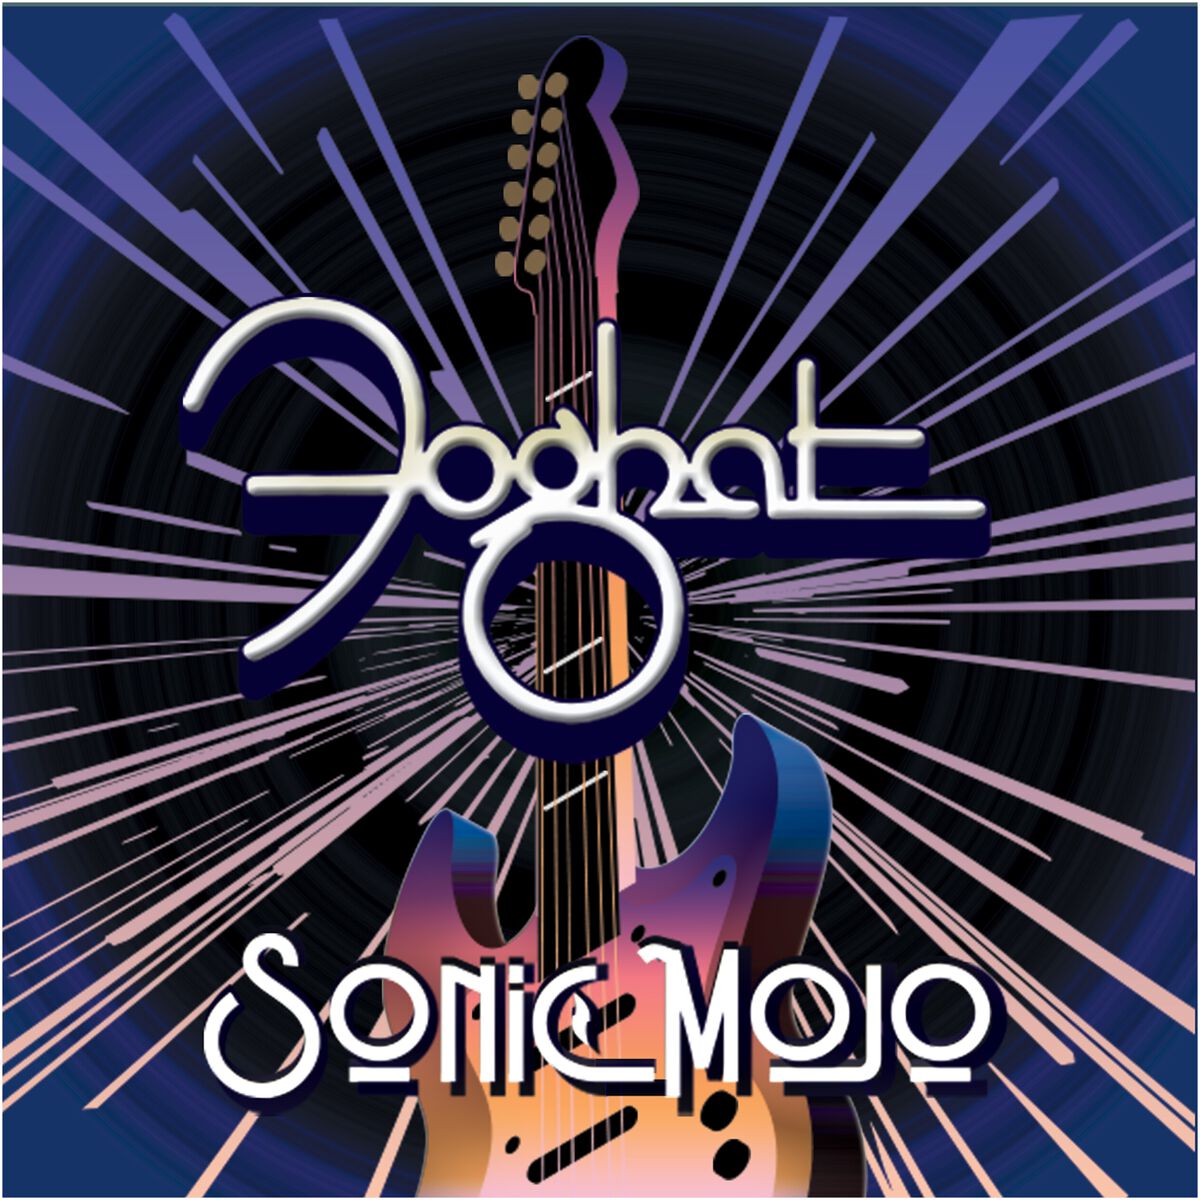 Sonic Mojo von Foghat - CD (Digipak)